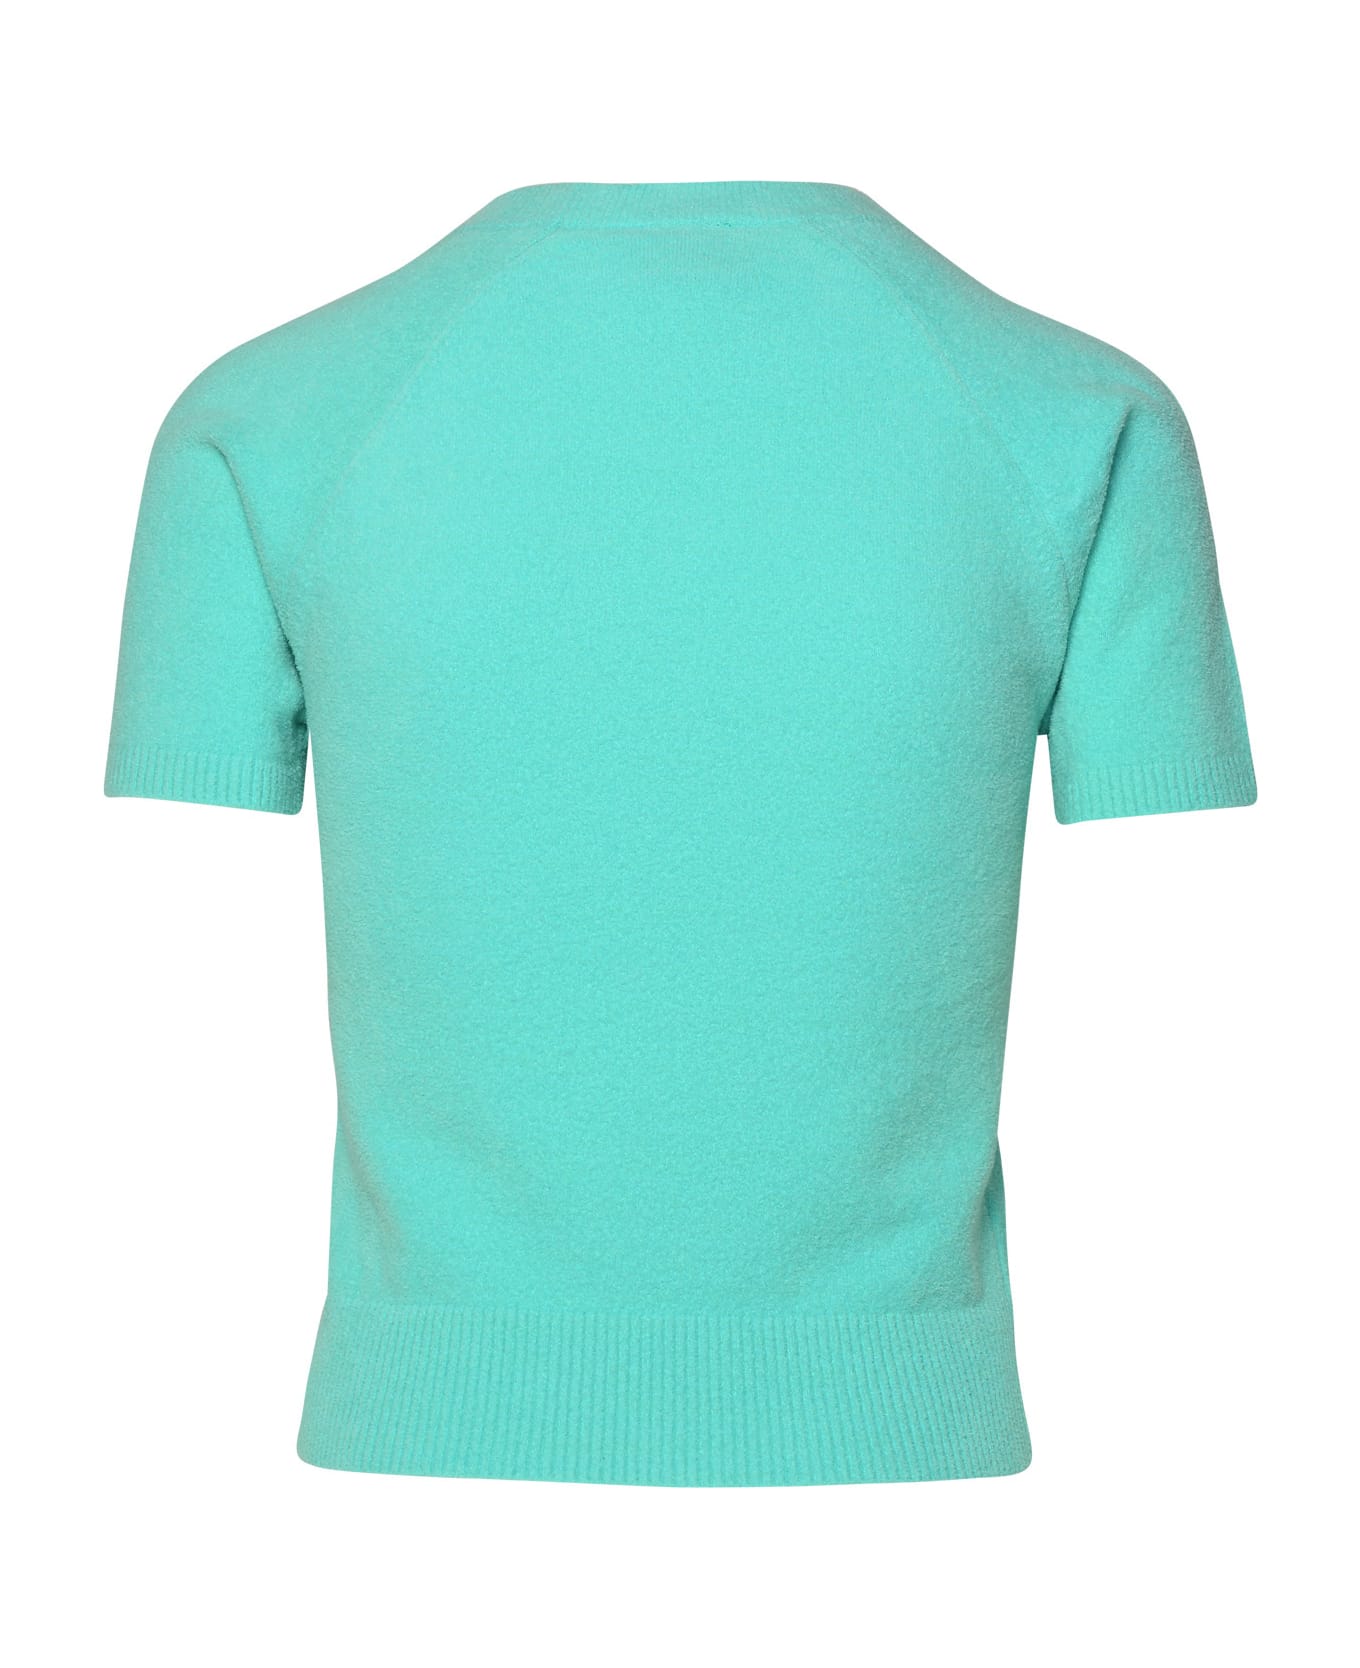 Patou Teal Cotton Blend Sweater - Light Blue Tシャツ